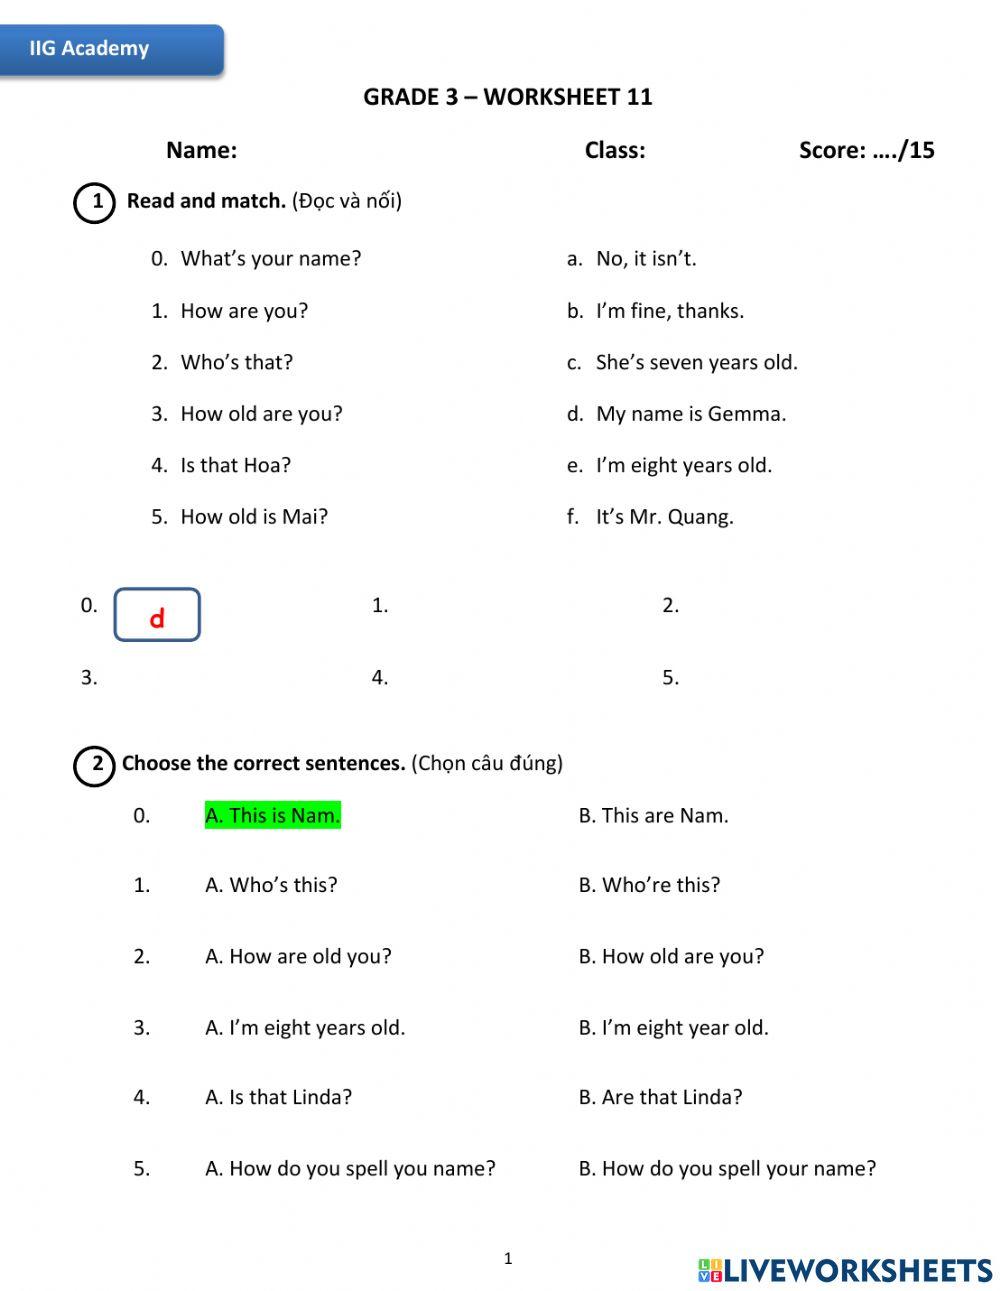 IIG-Grade 3-Worksheet 11